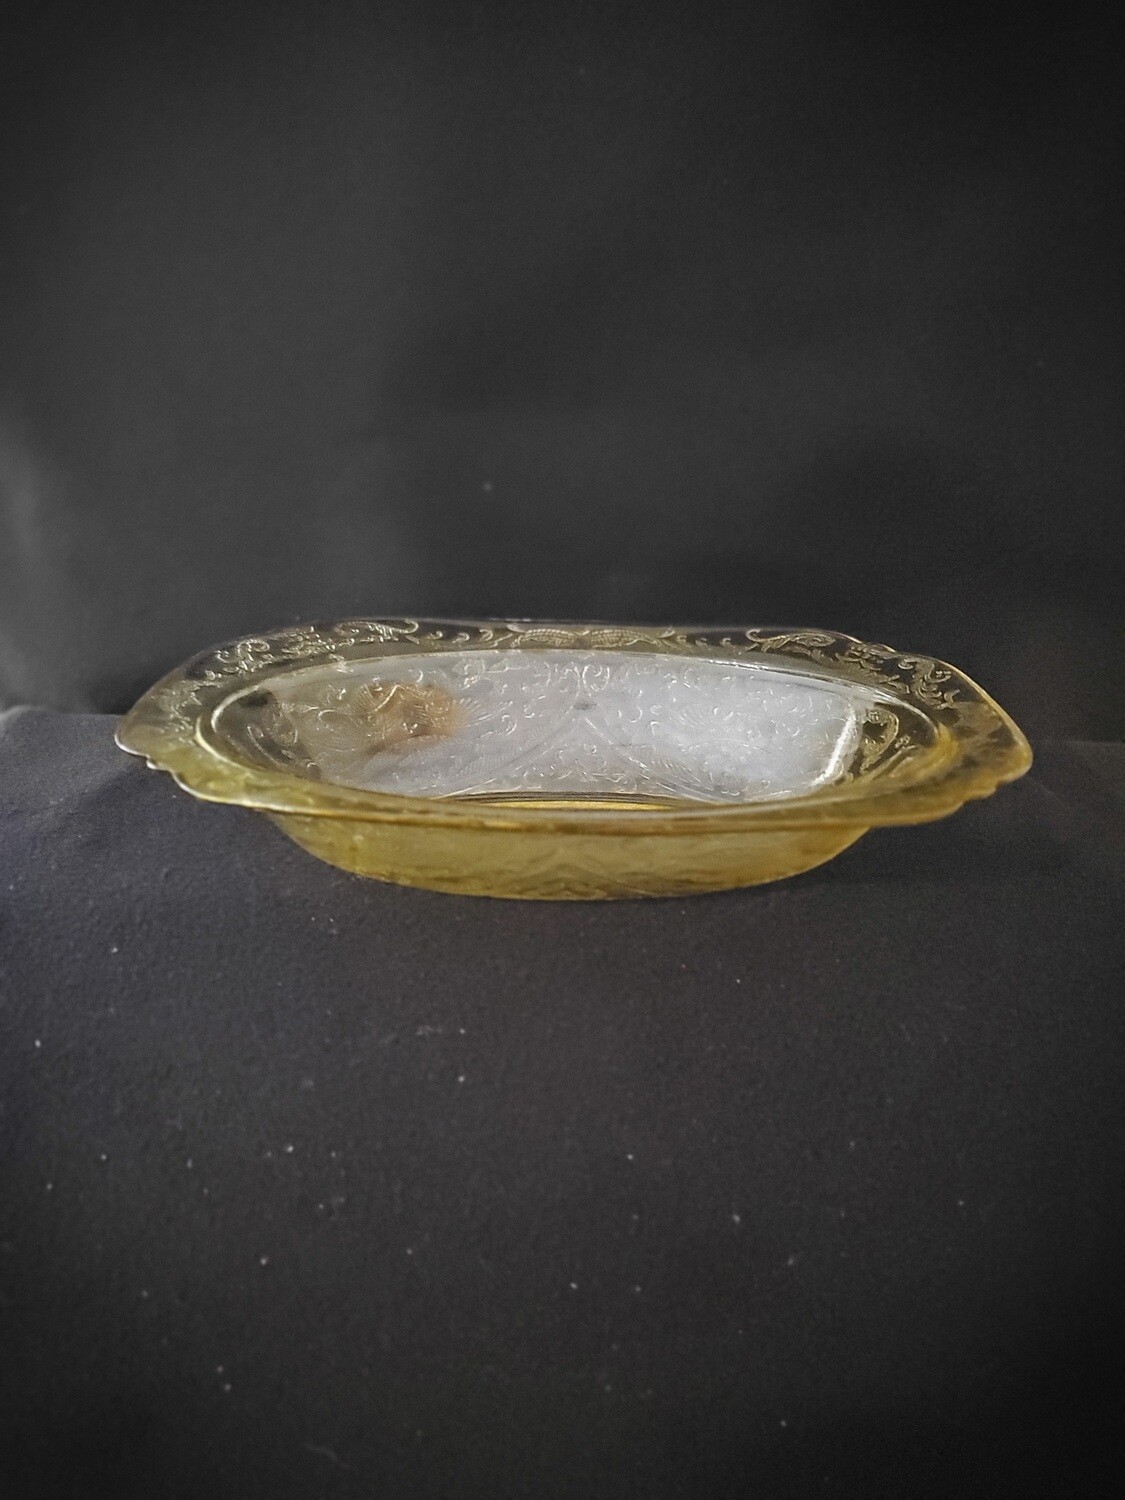 Vintage, Oval Vegetable Serving Bowl 10", Madrid Amber Depression Glass by Federal Glass